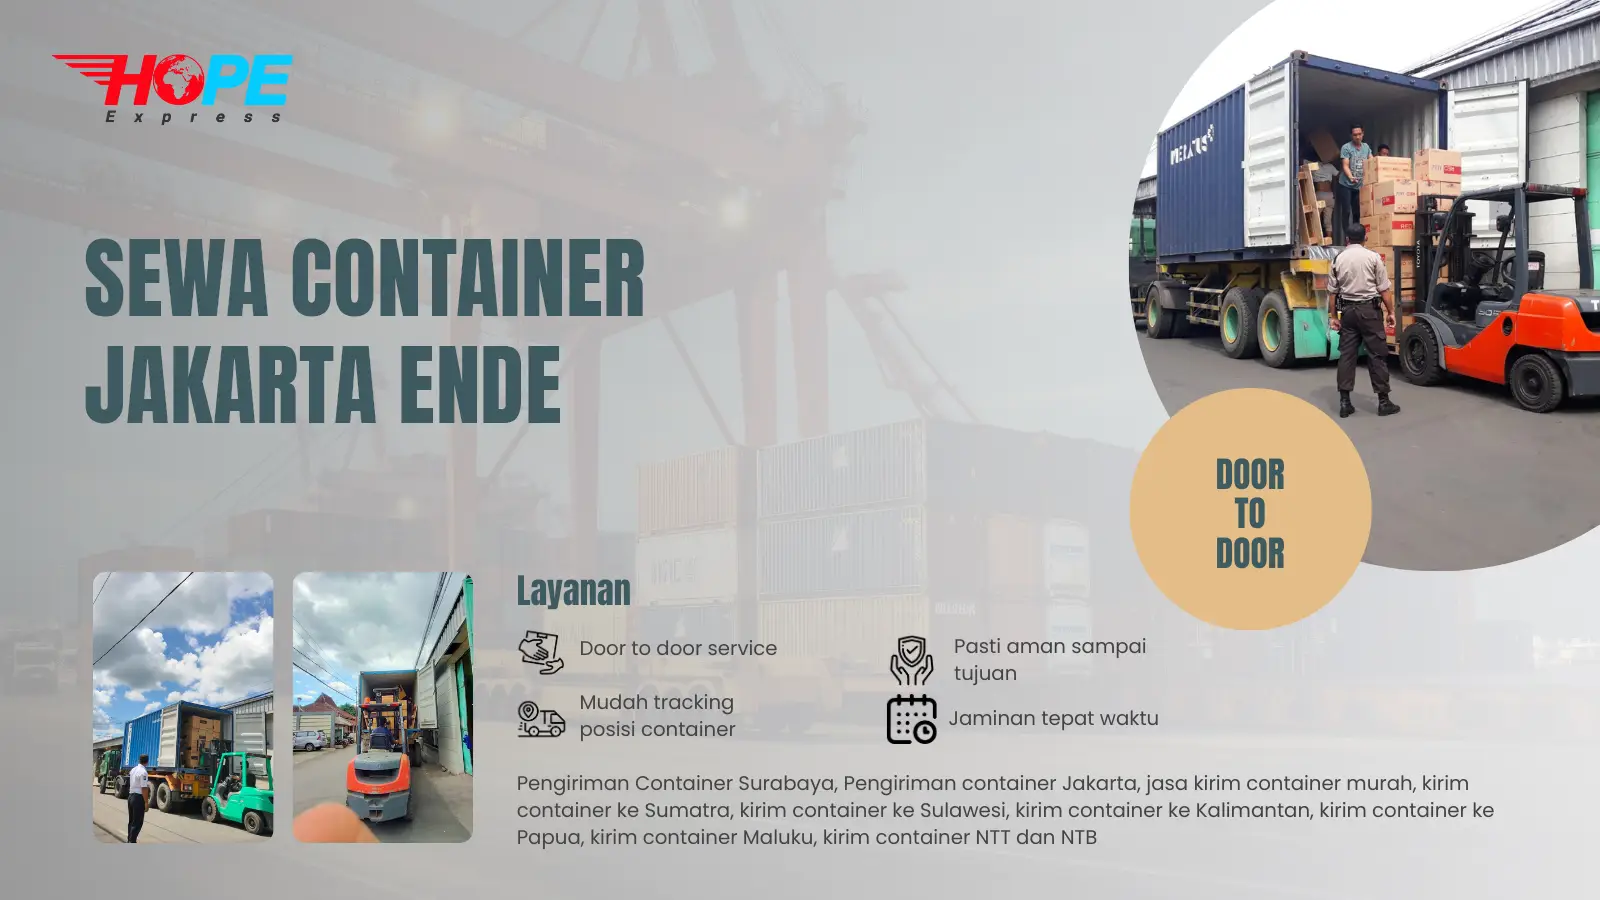 Sewa Container Jakarta Ende